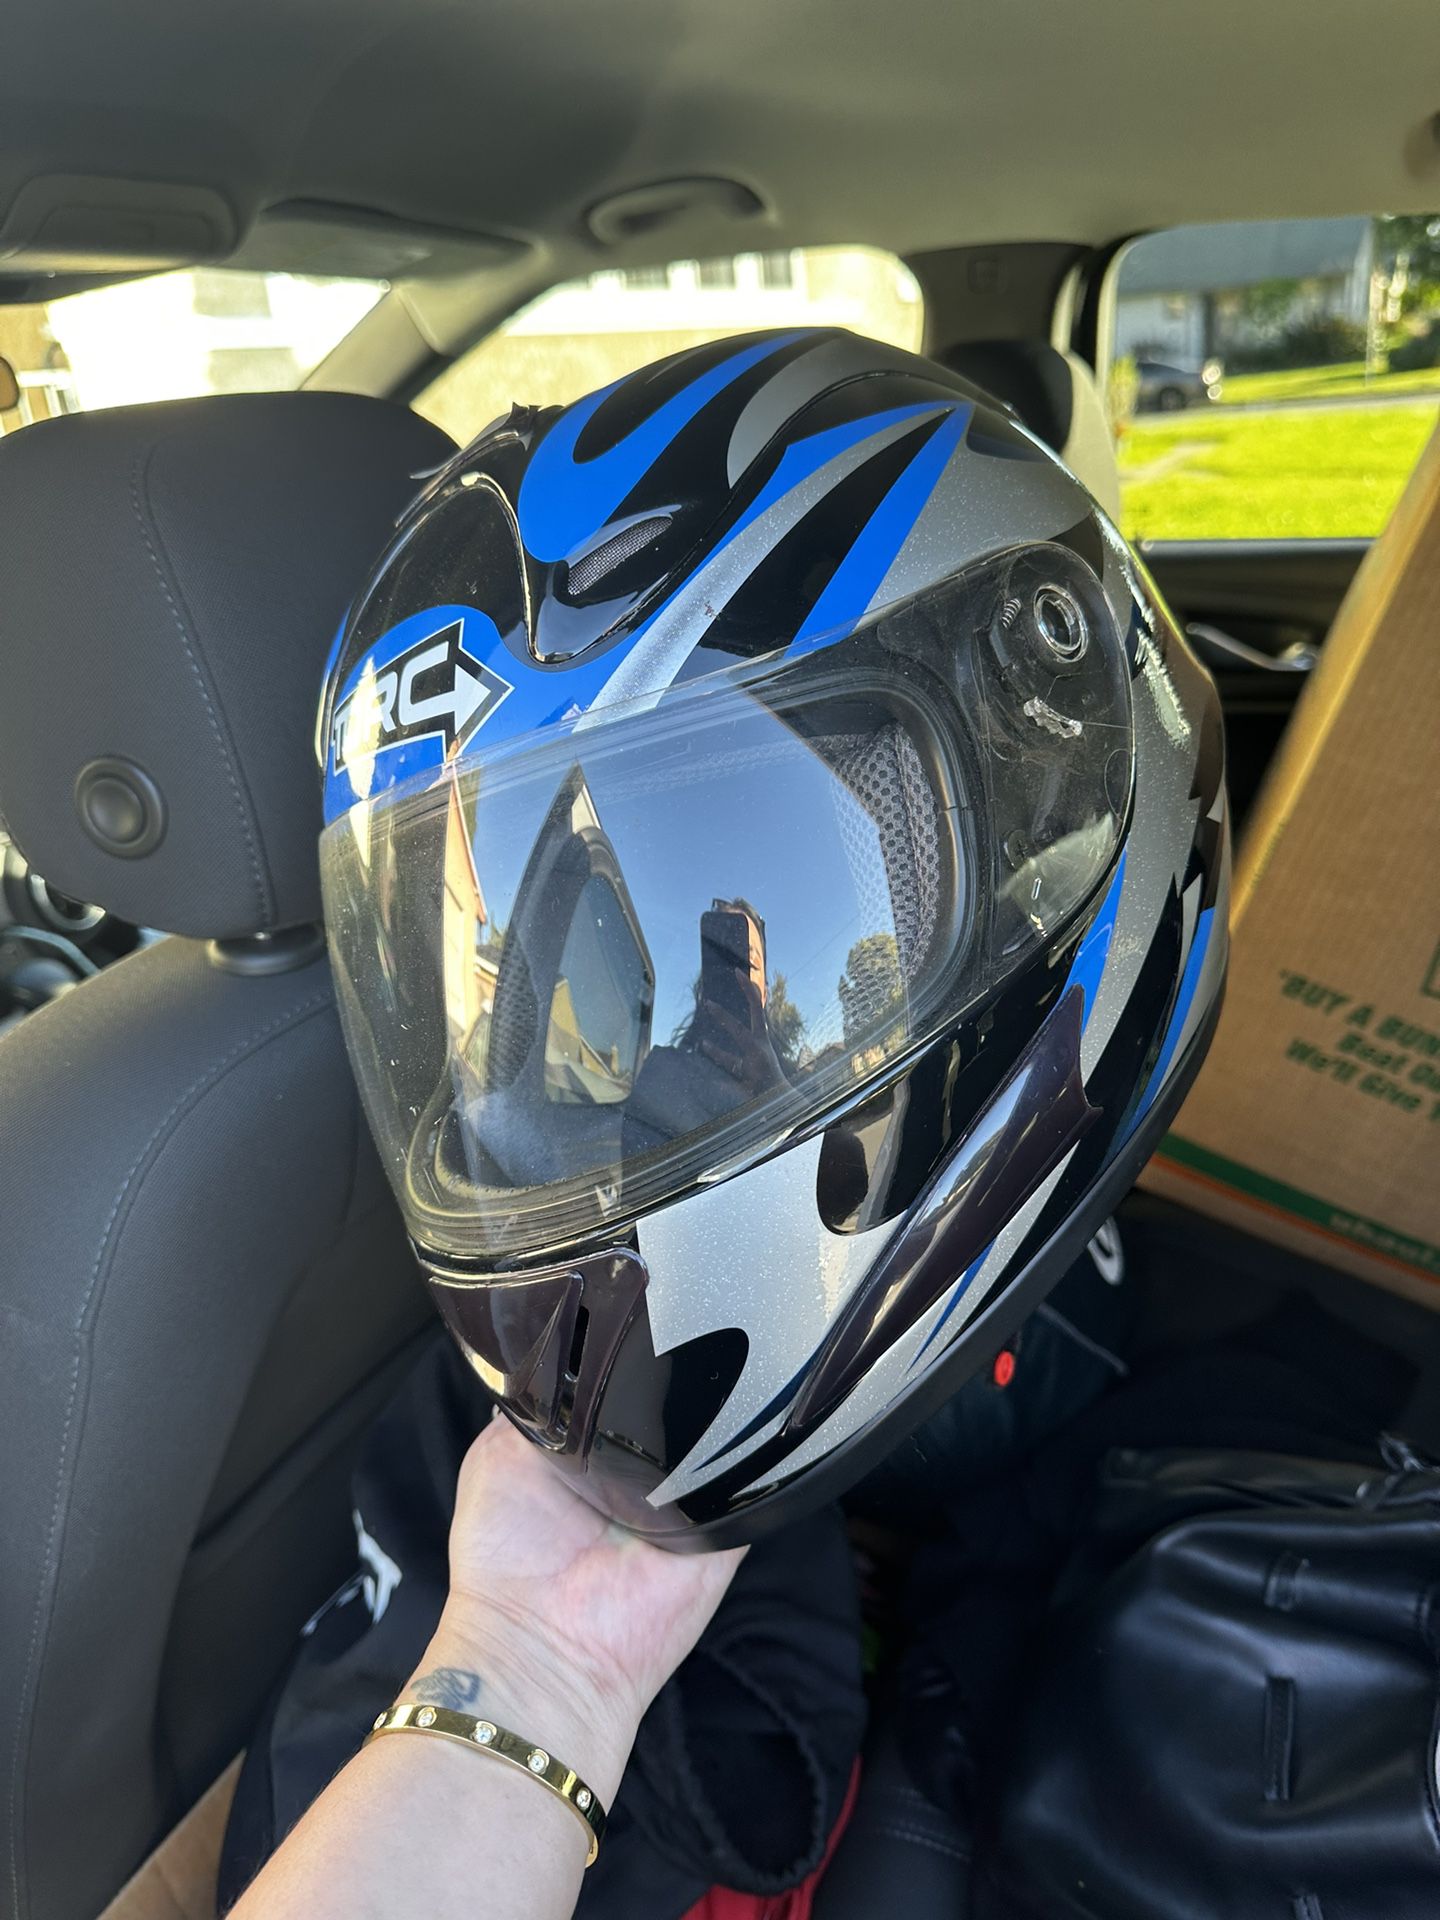 Used Helmets, New Battery